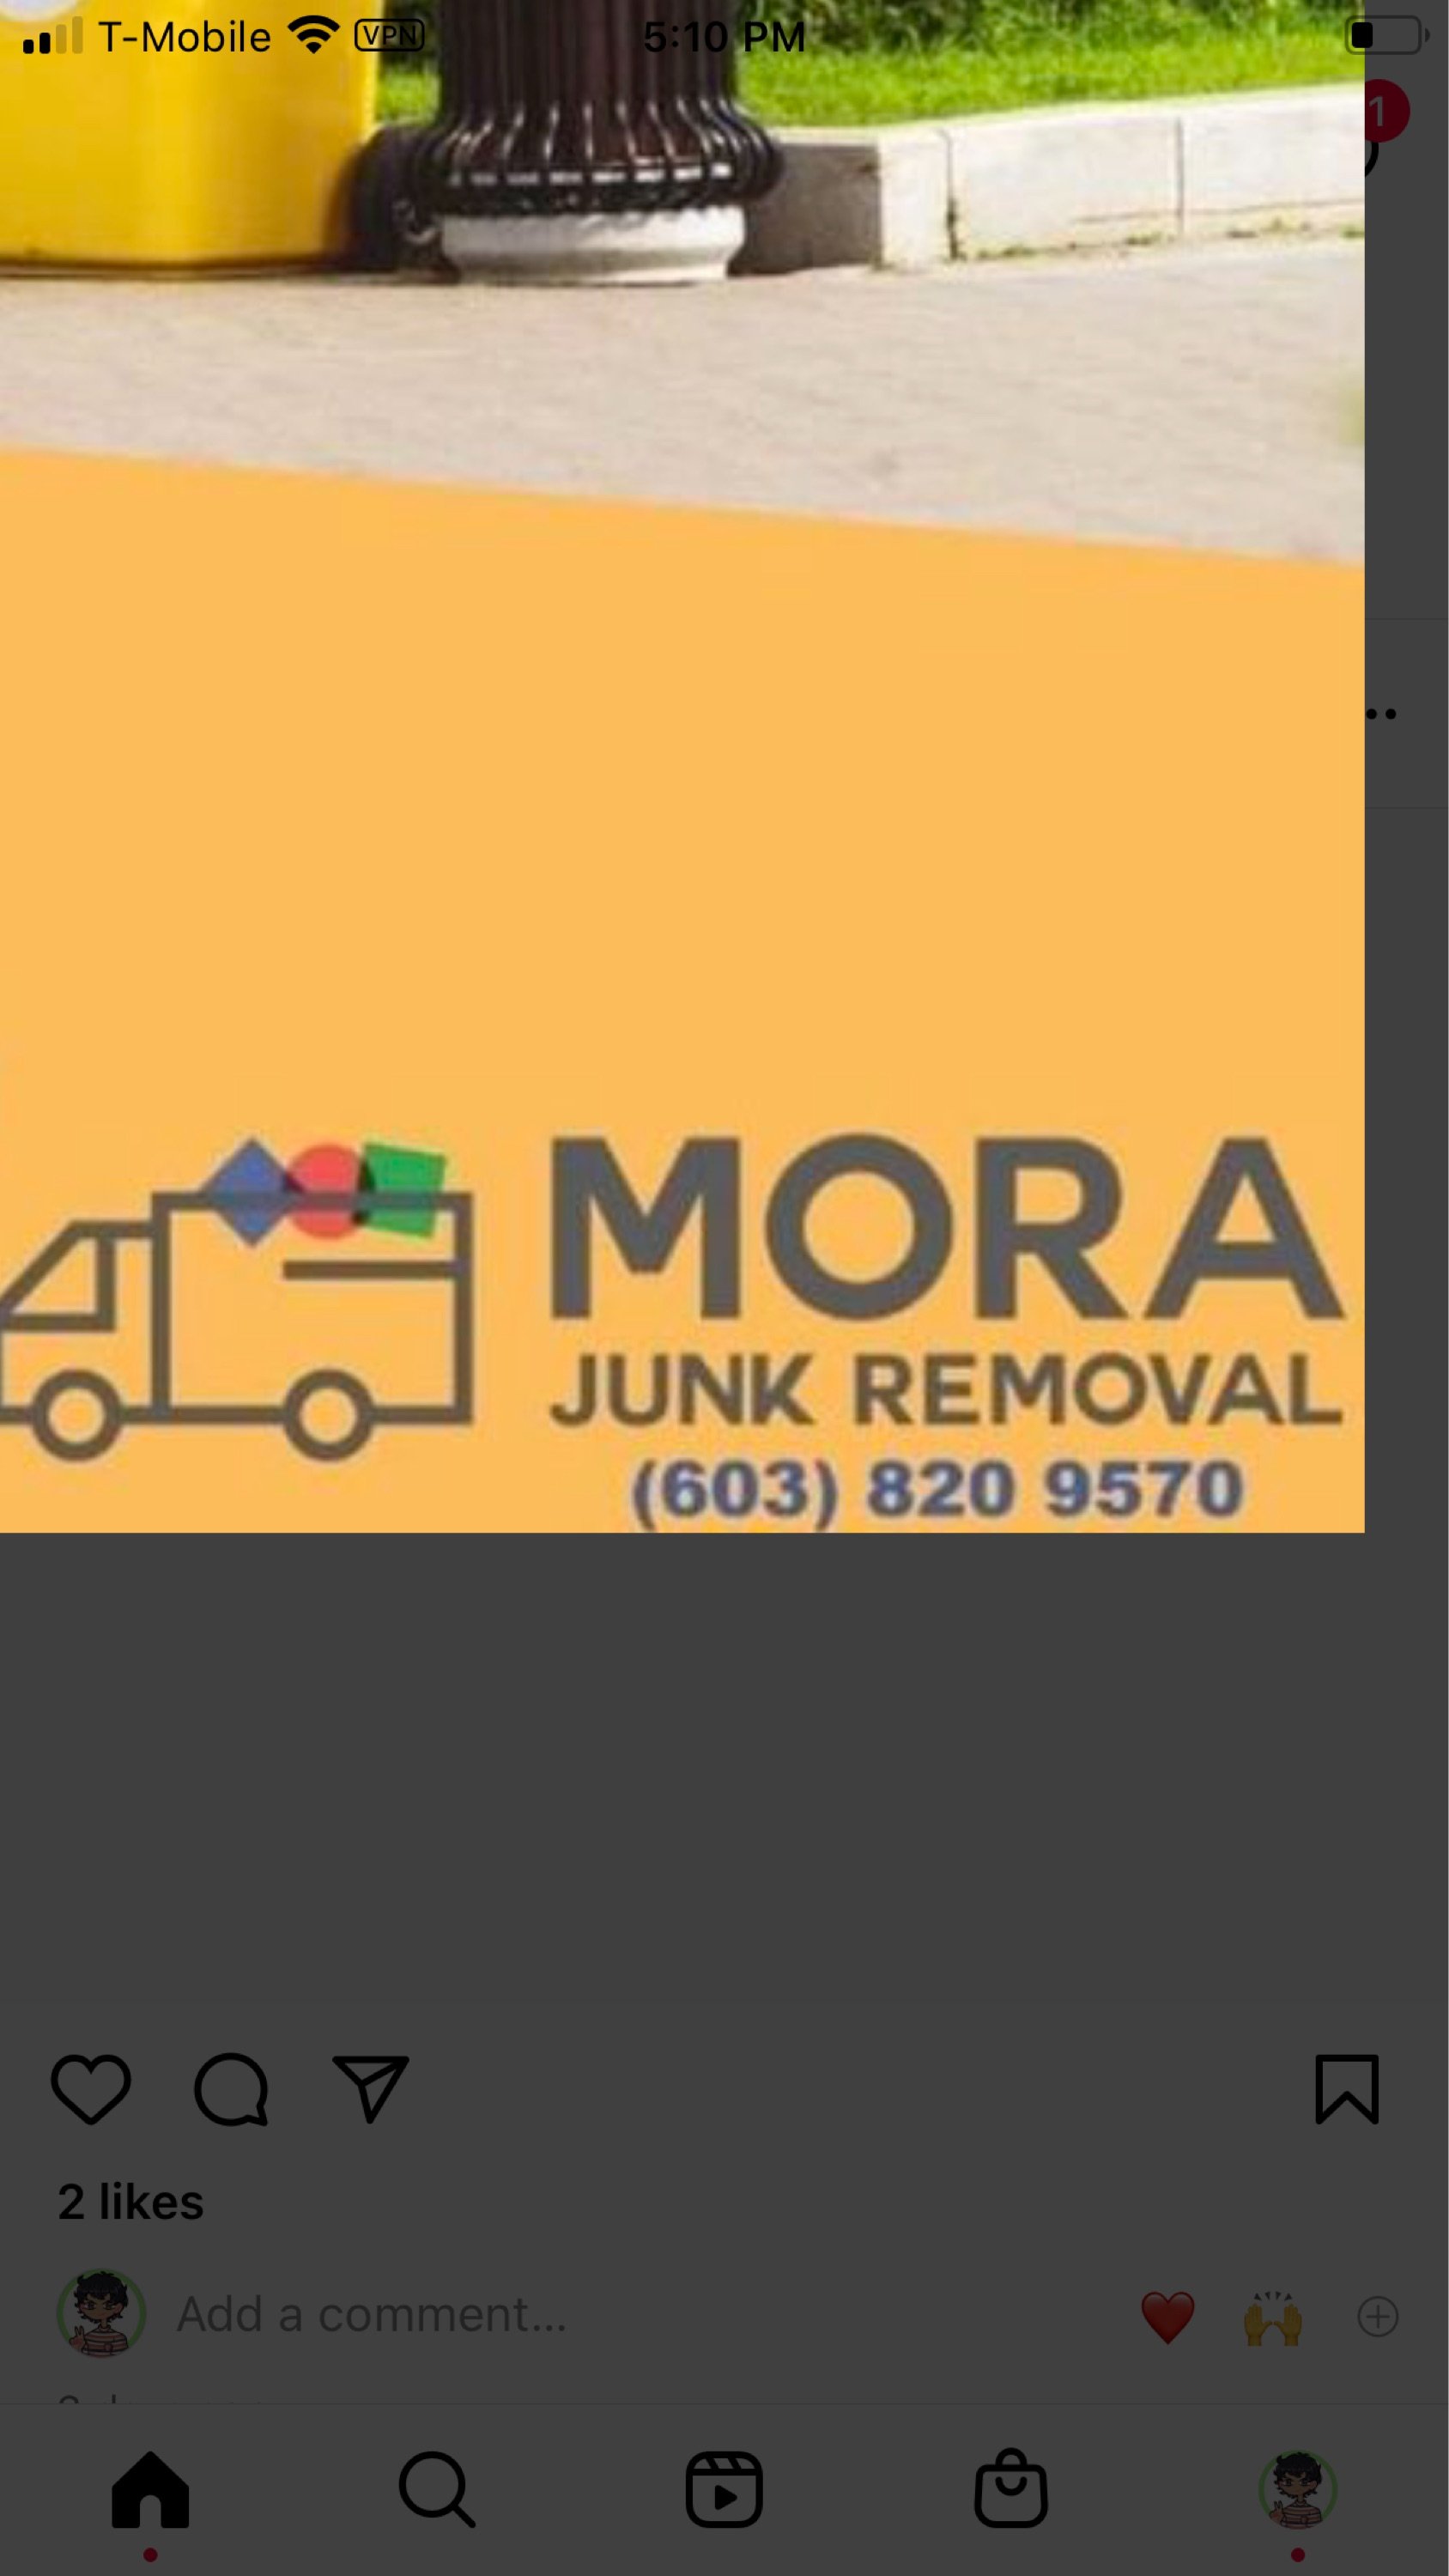 Mora Junk Removal Logo